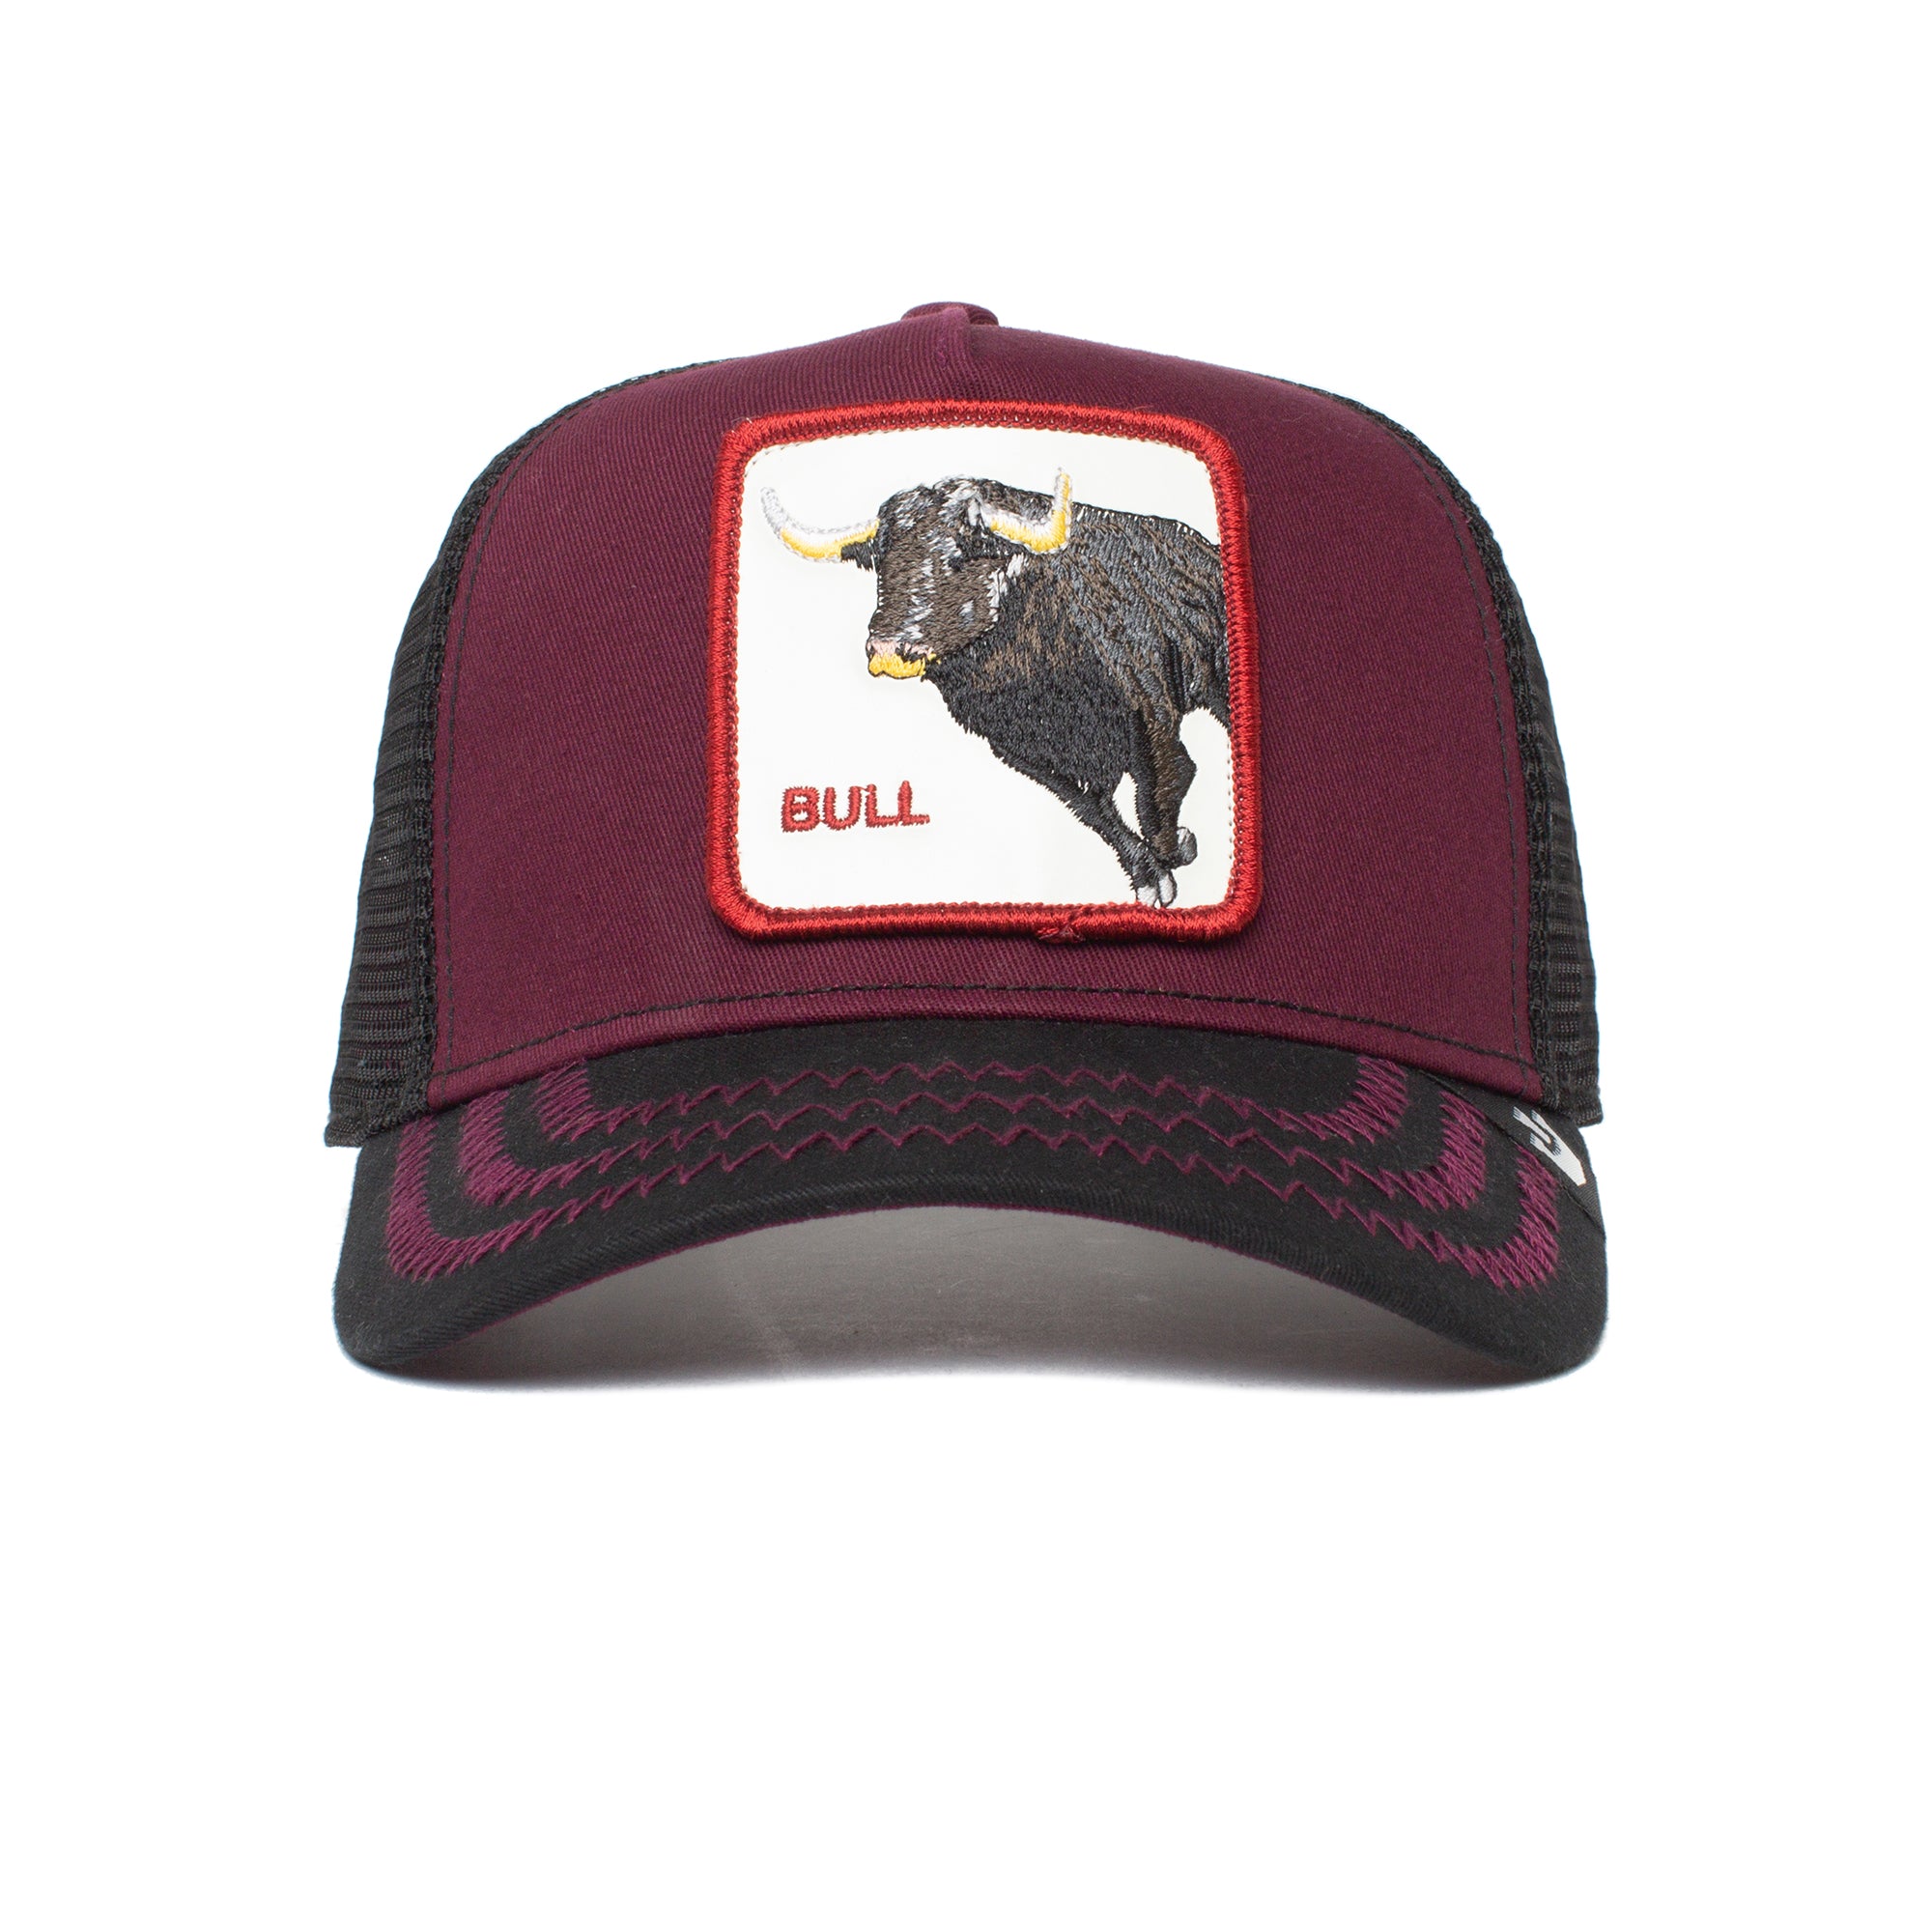 Goorin Bros. Party Animal Trucker Hat